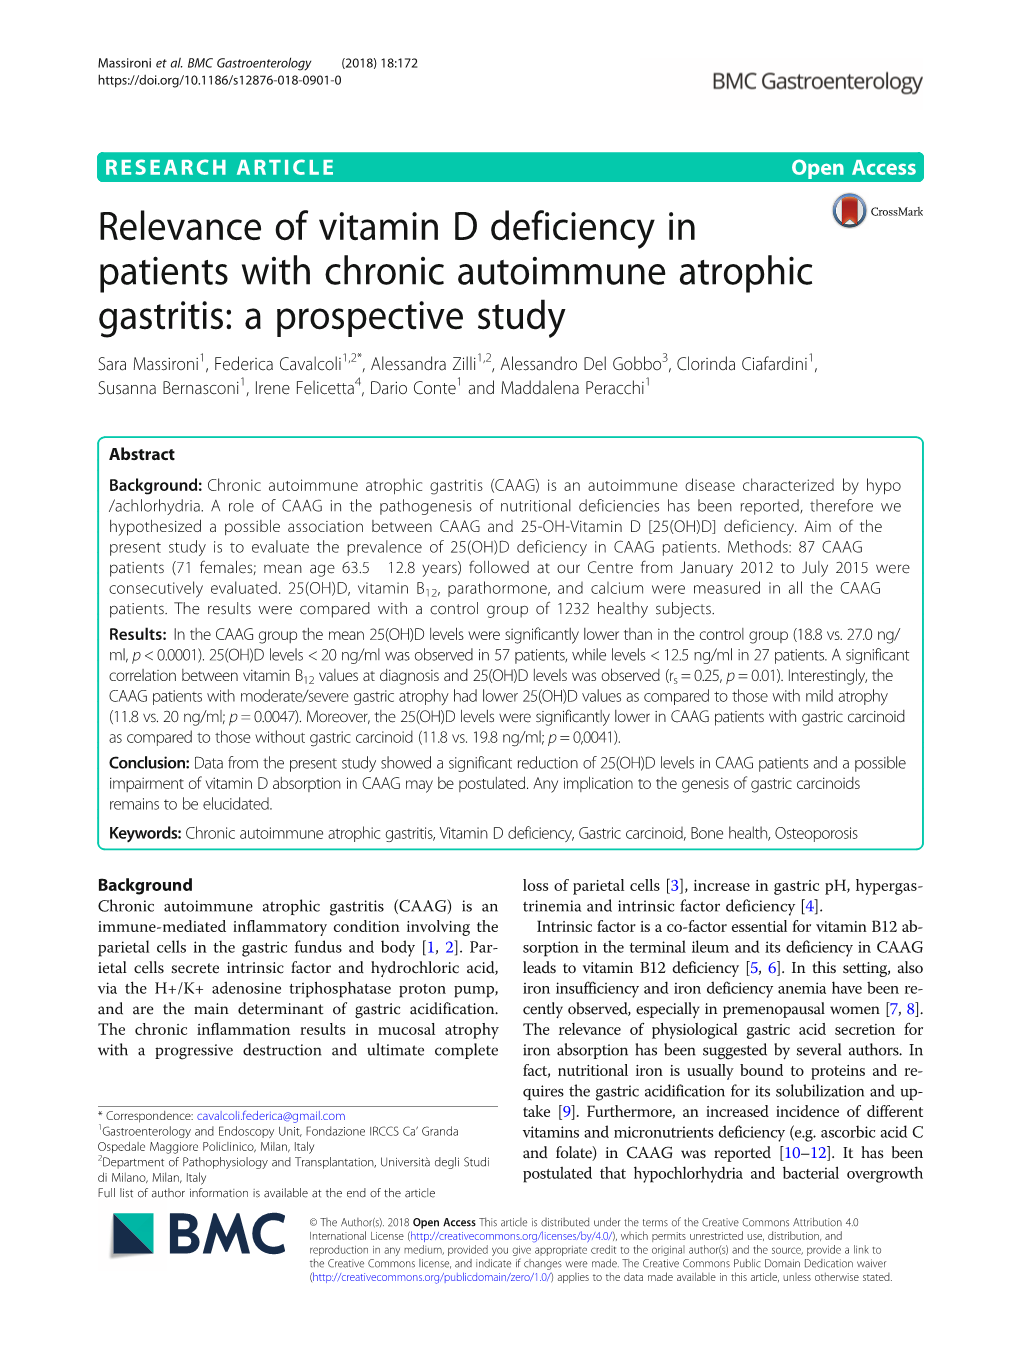 Relevance of Vitamin D Deficiency in Patients